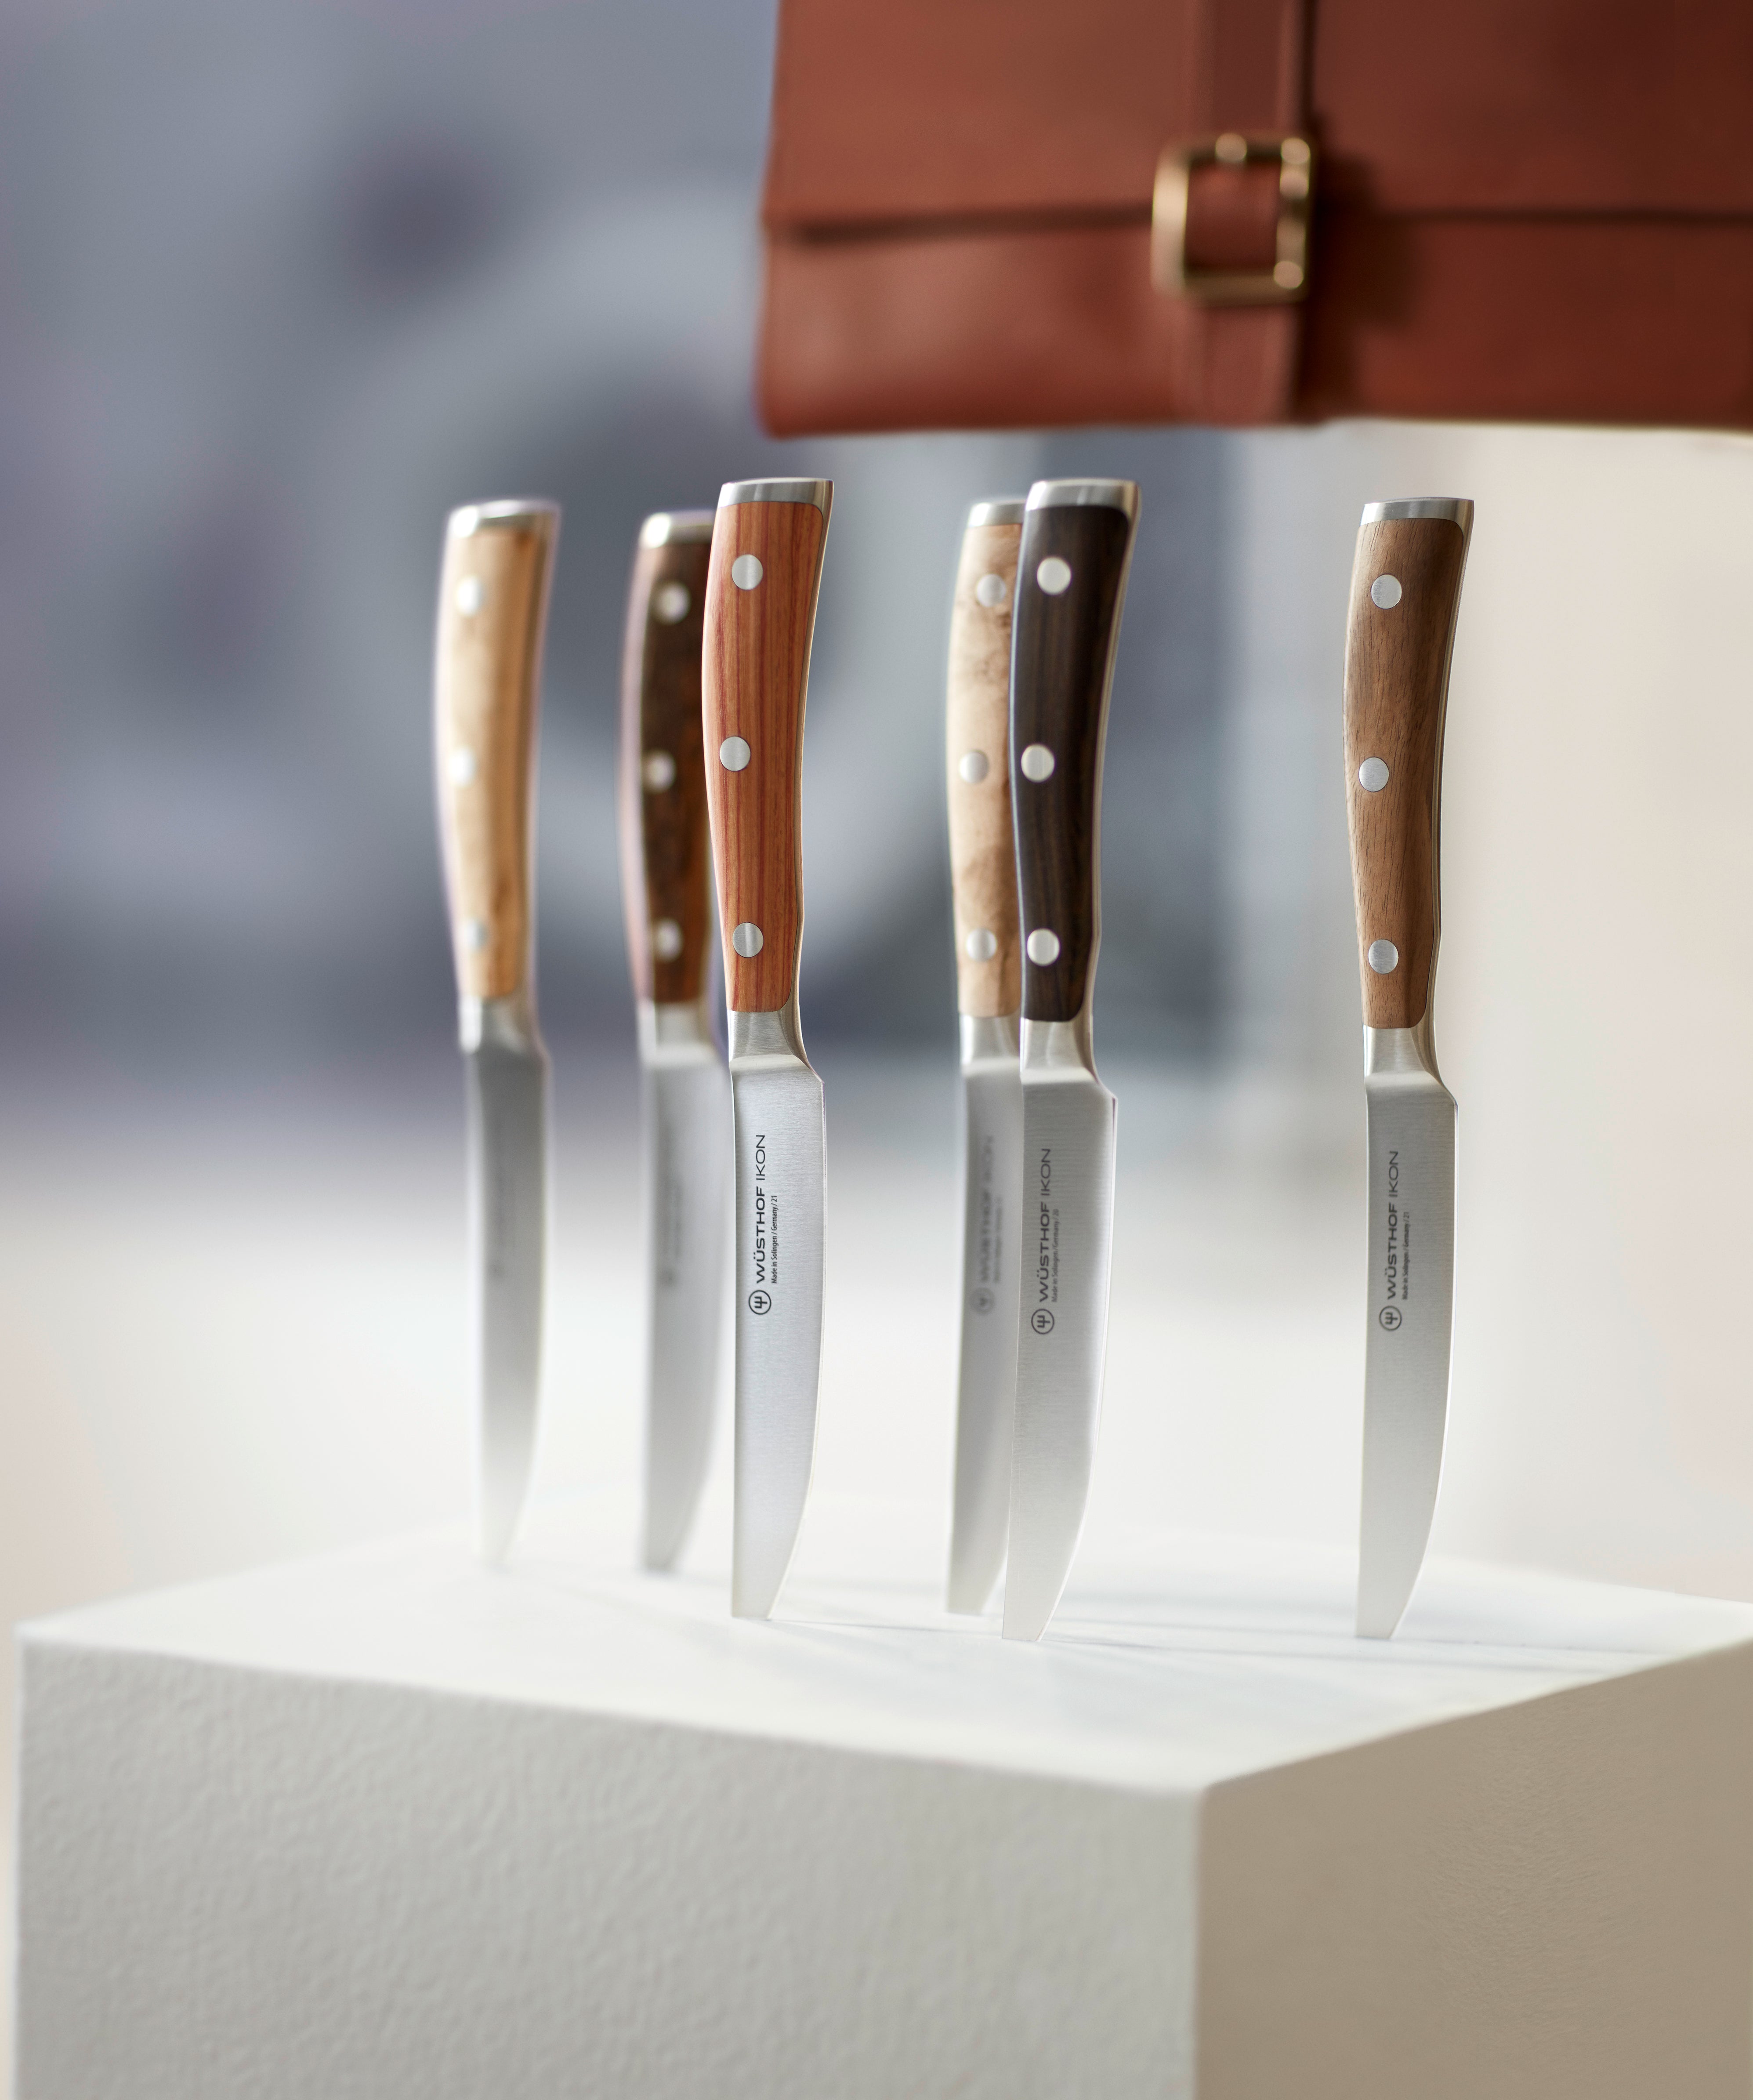 Steak set – Innovative and ergonomic design